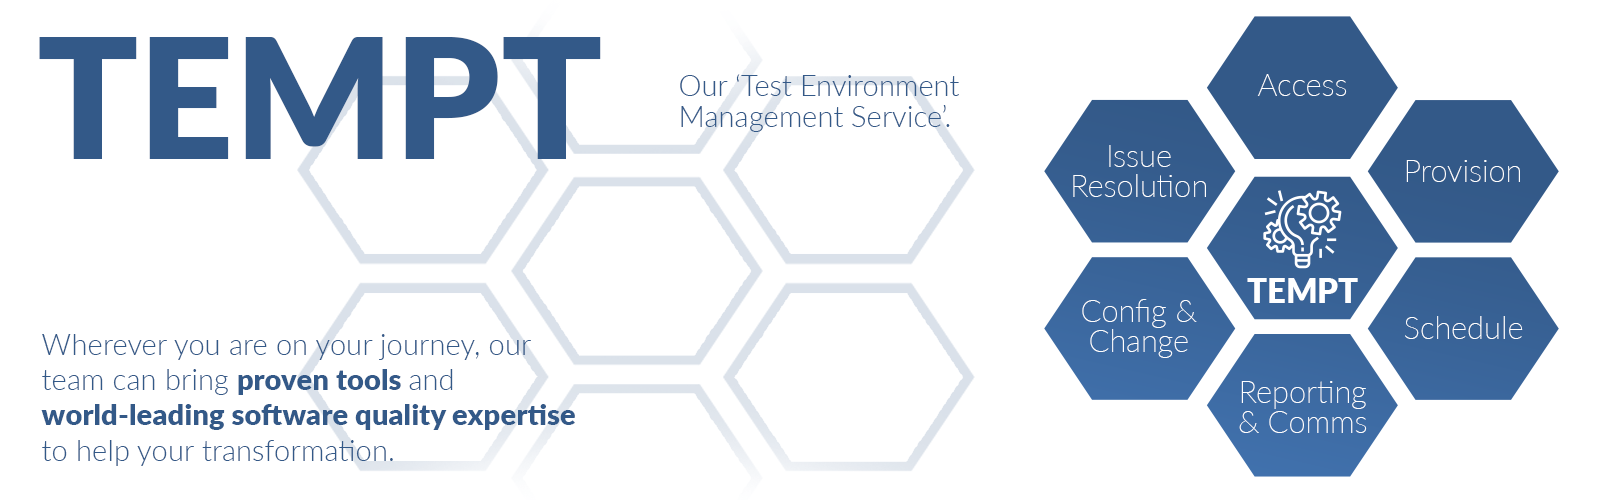 Test Environment Management & Provisioning Team Service